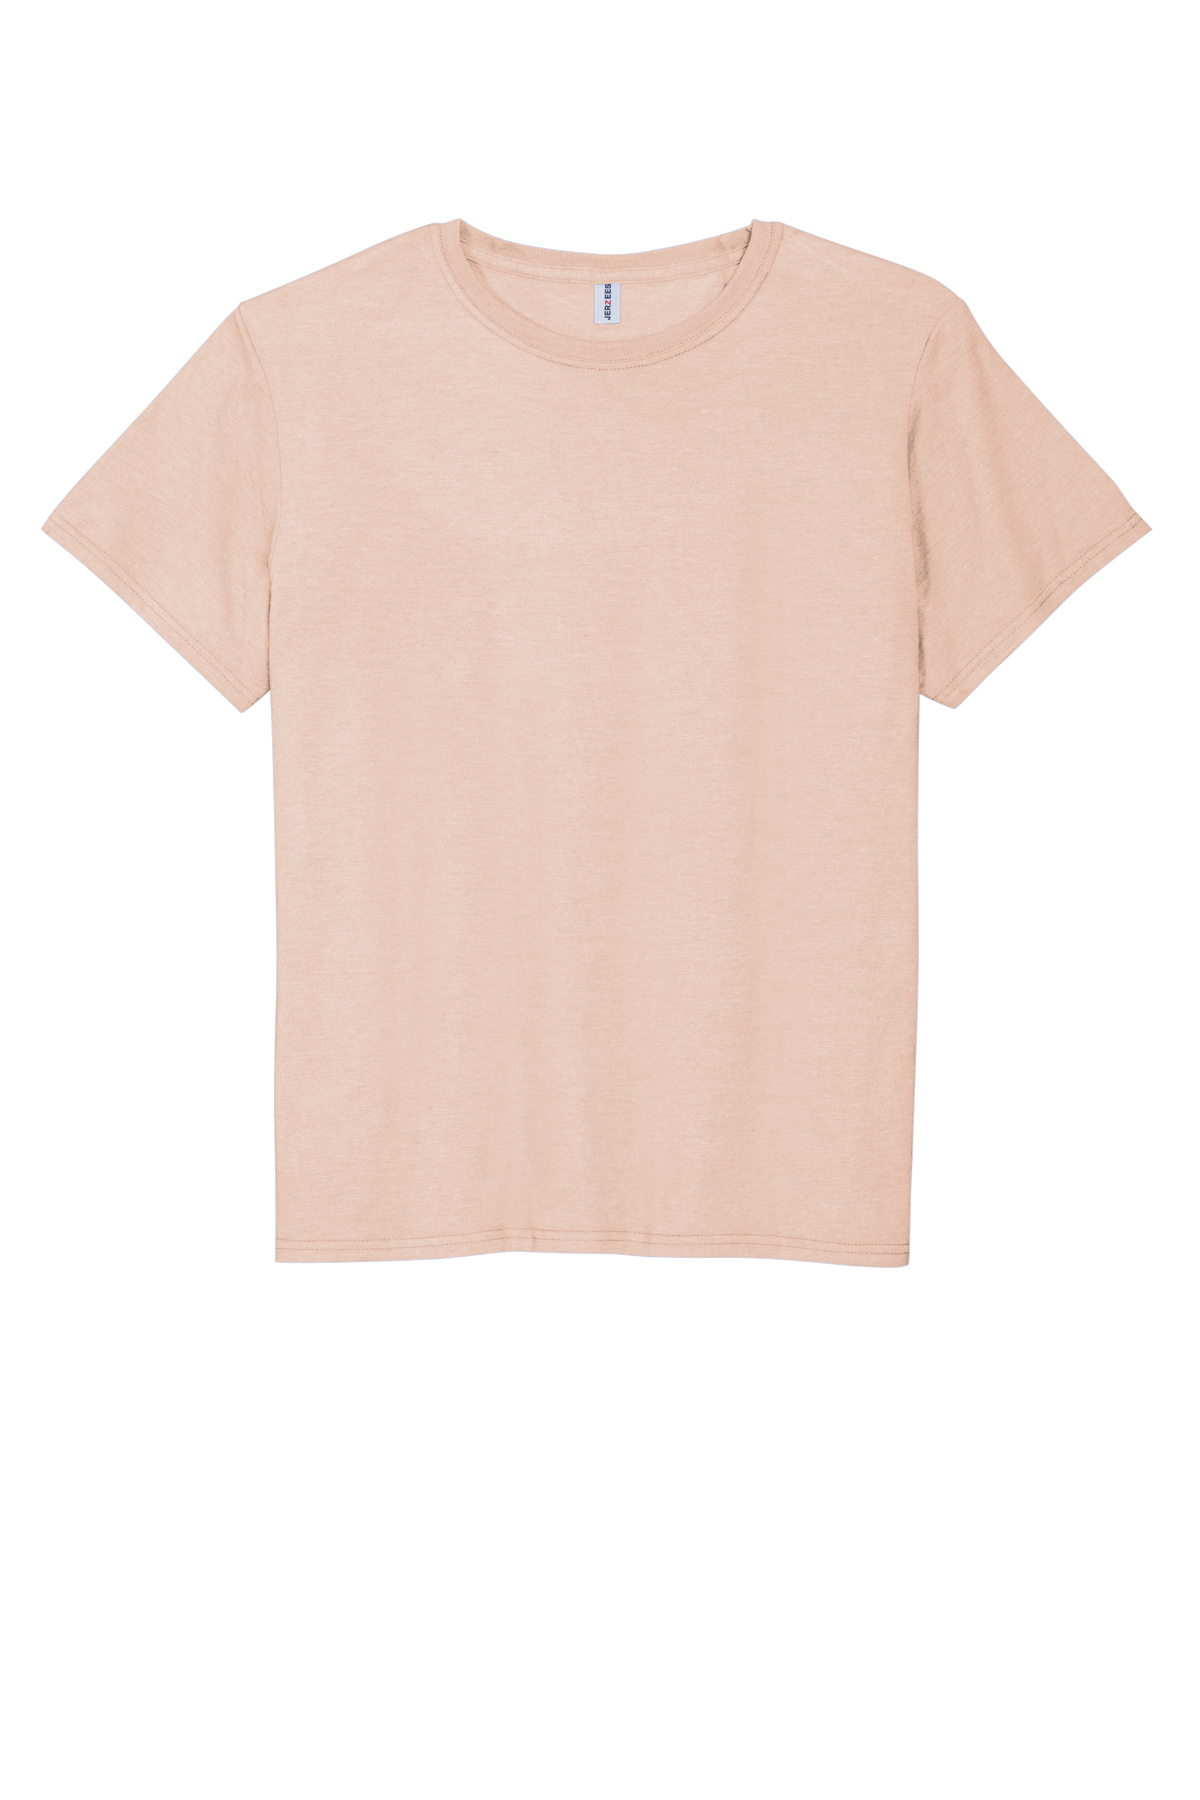 Jerzees Premium Blend Ring Spun T-Shirt | Product | SanMar